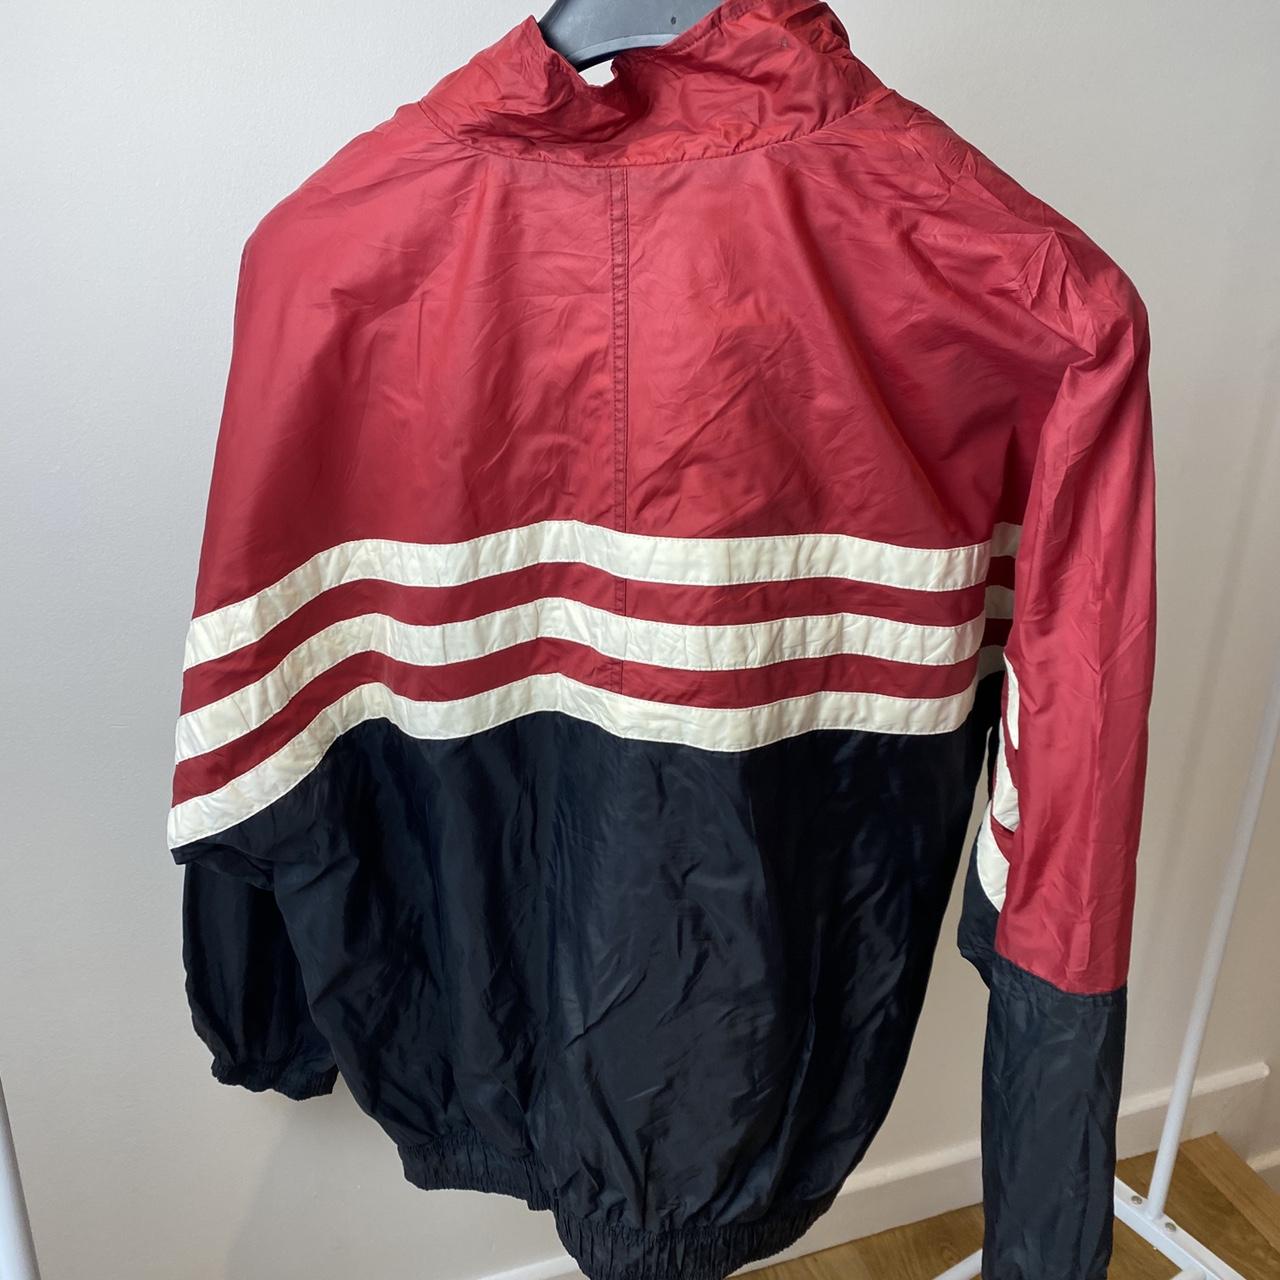 Retro Adidas Jacket/Windbreaker in black red and... - Depop